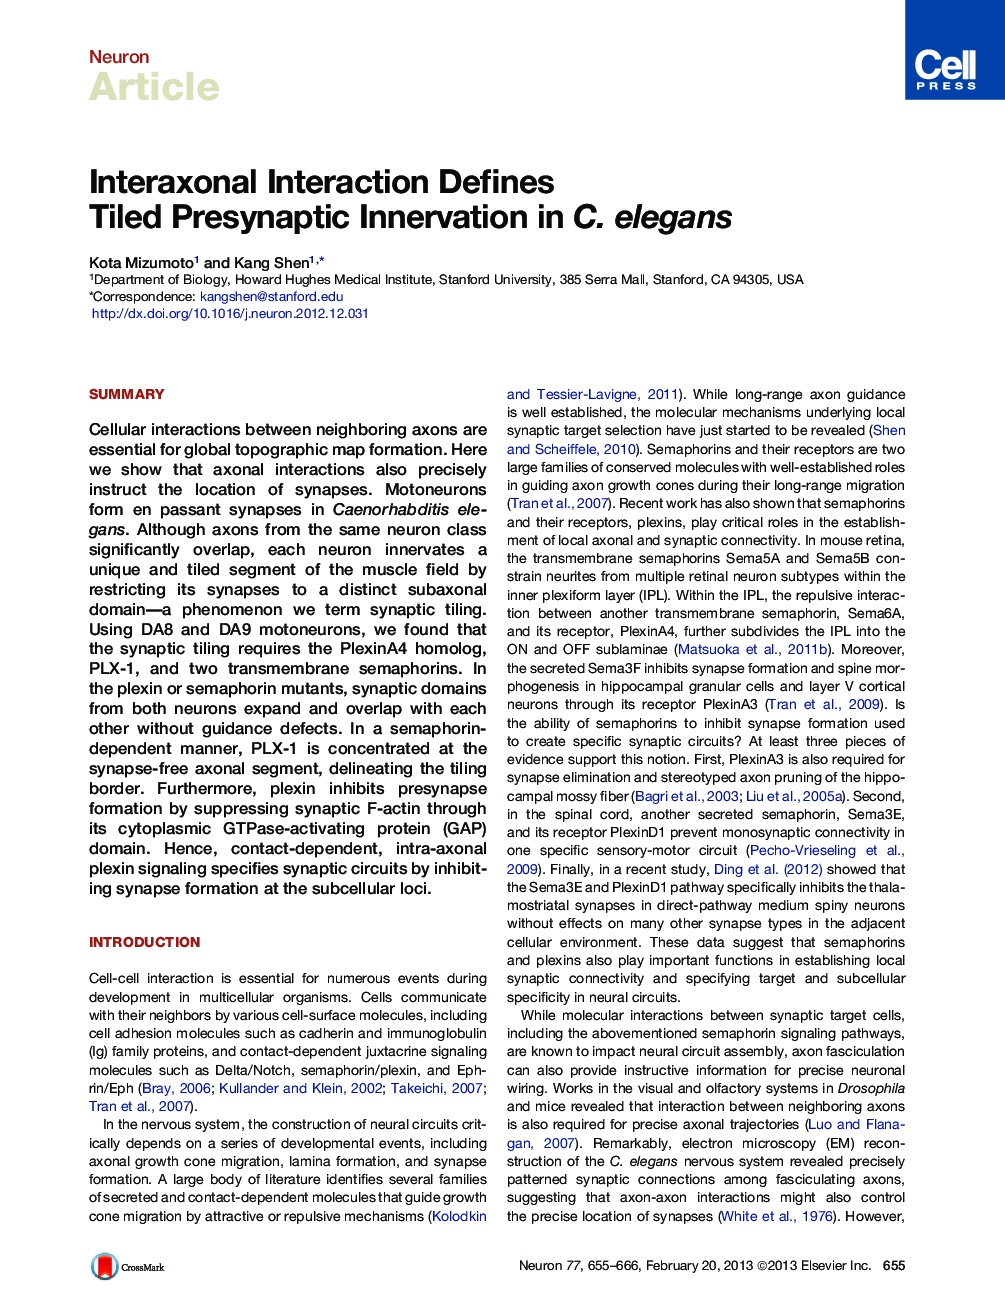 Interaxonal Interaction Defines Tiled Presynaptic Innervation in C. elegans